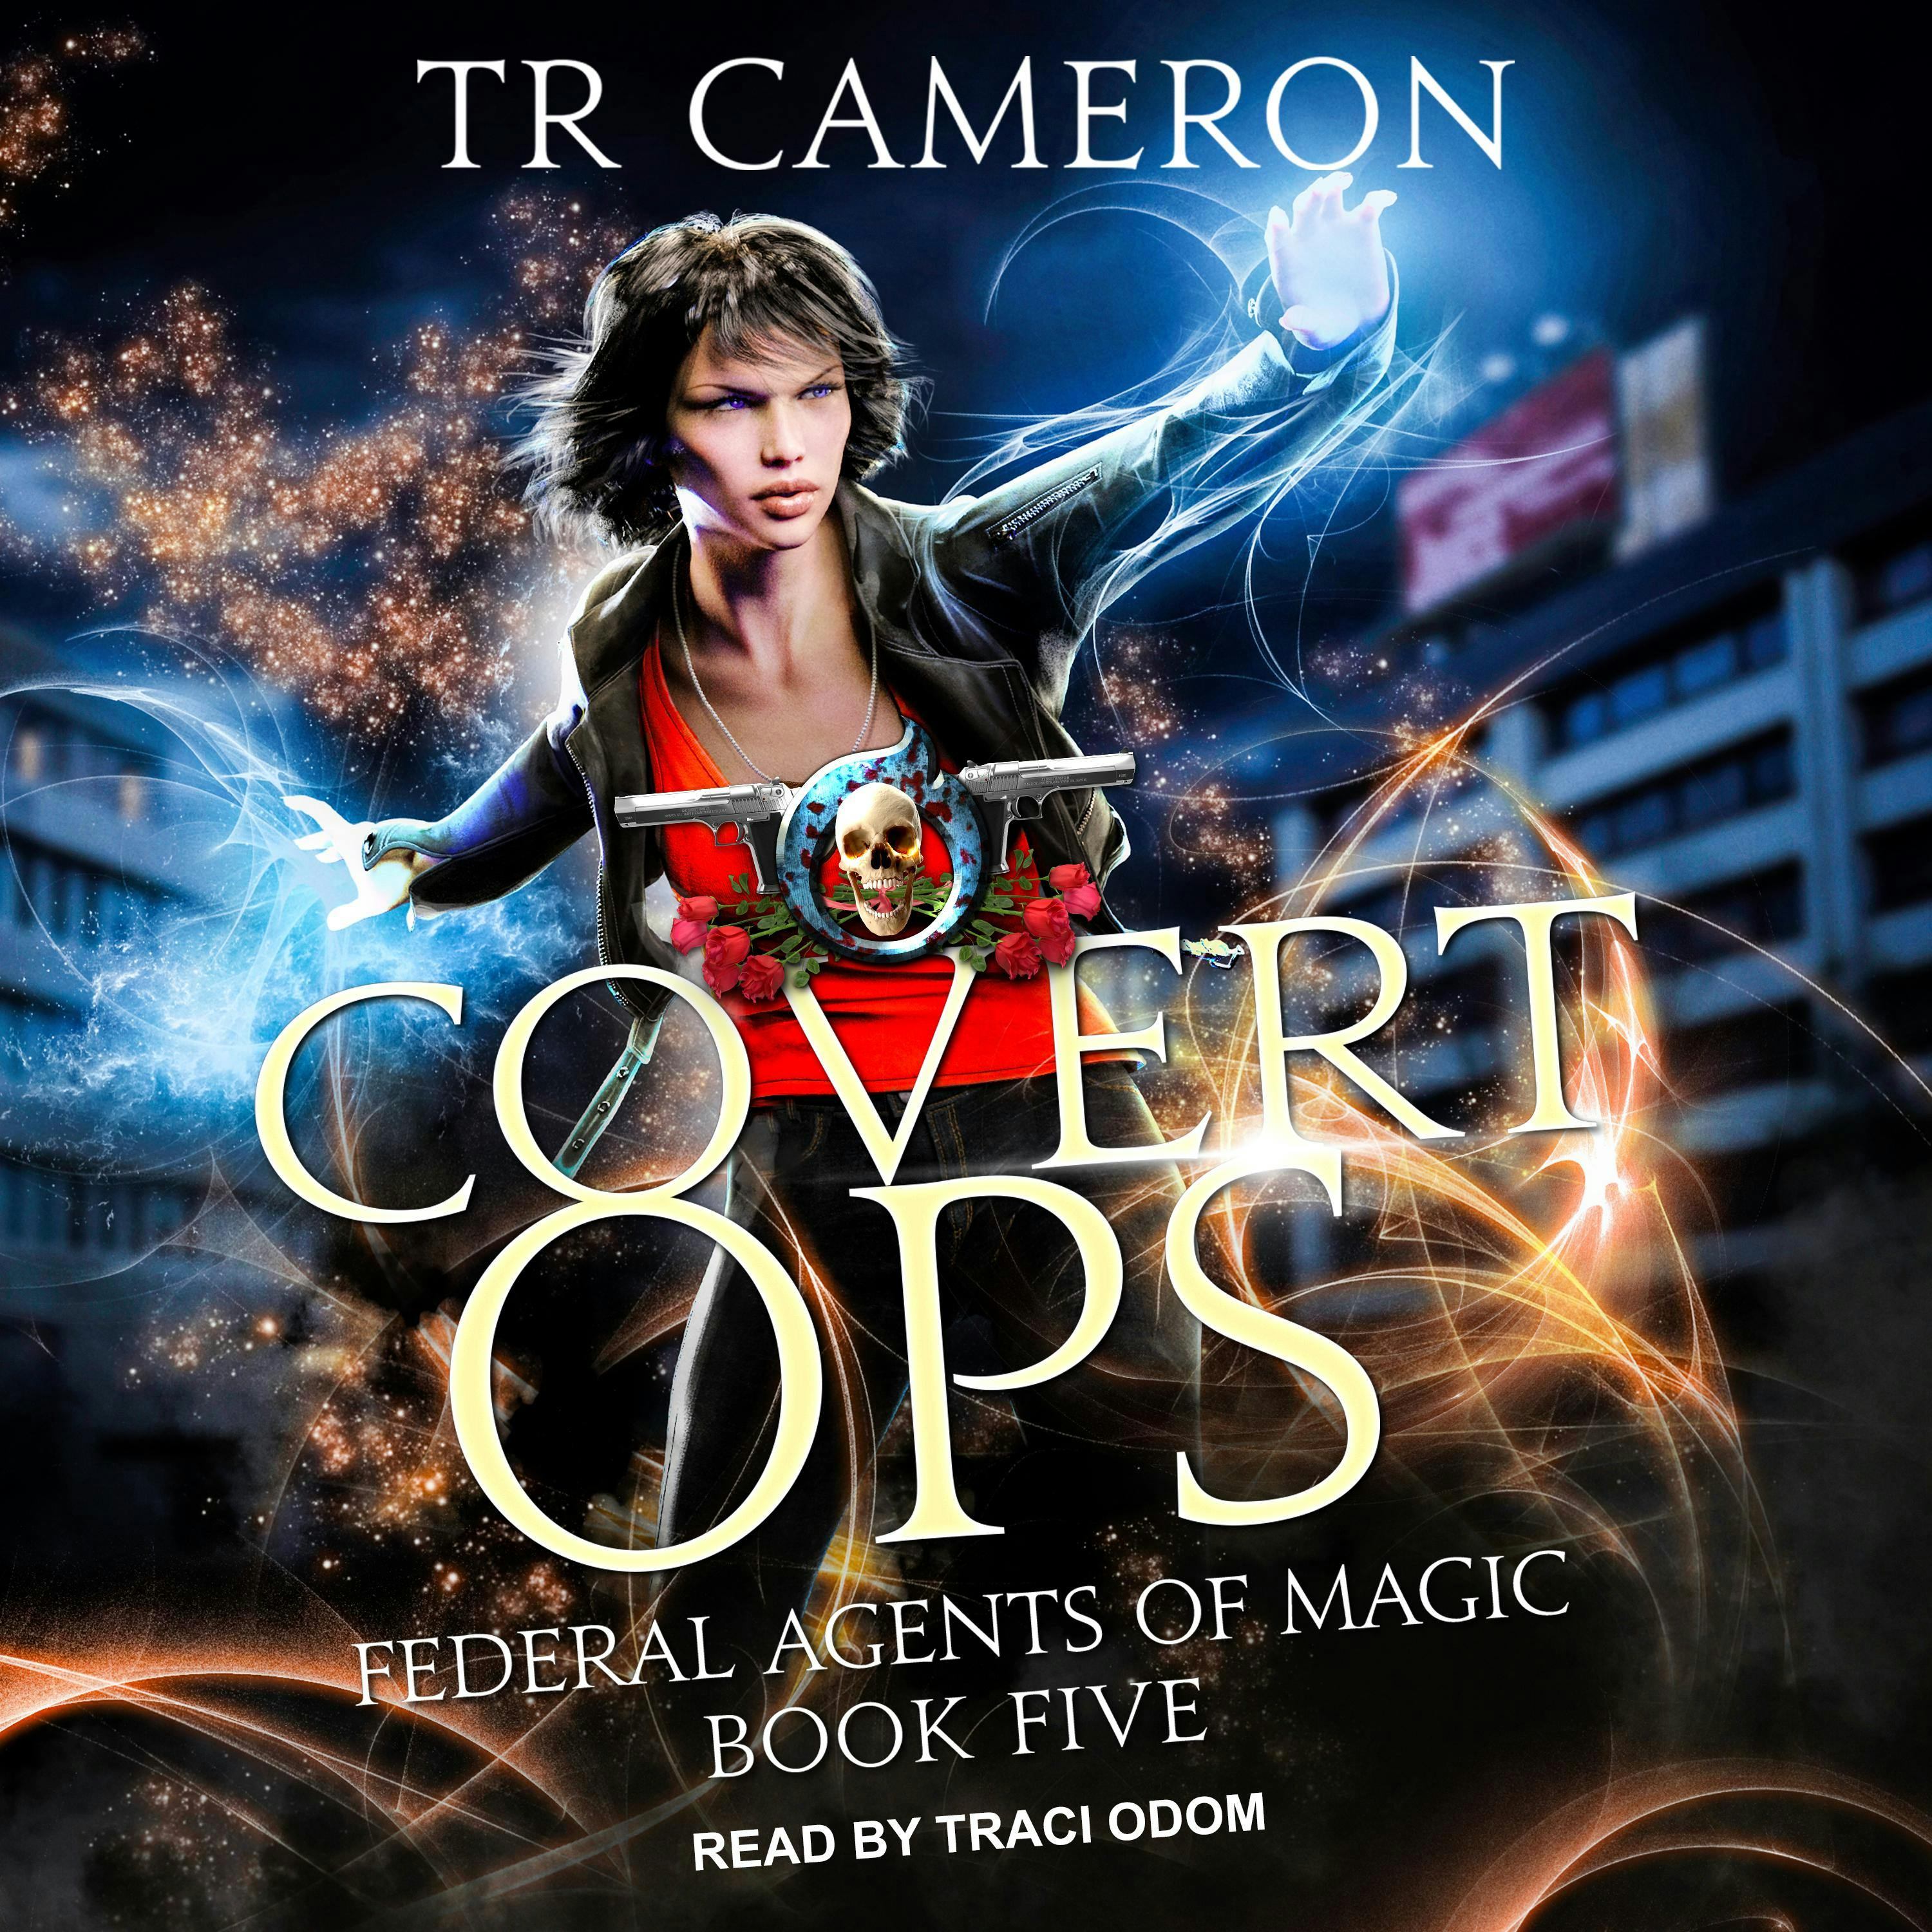 Covert Ops, Audiobook, TR Cameron